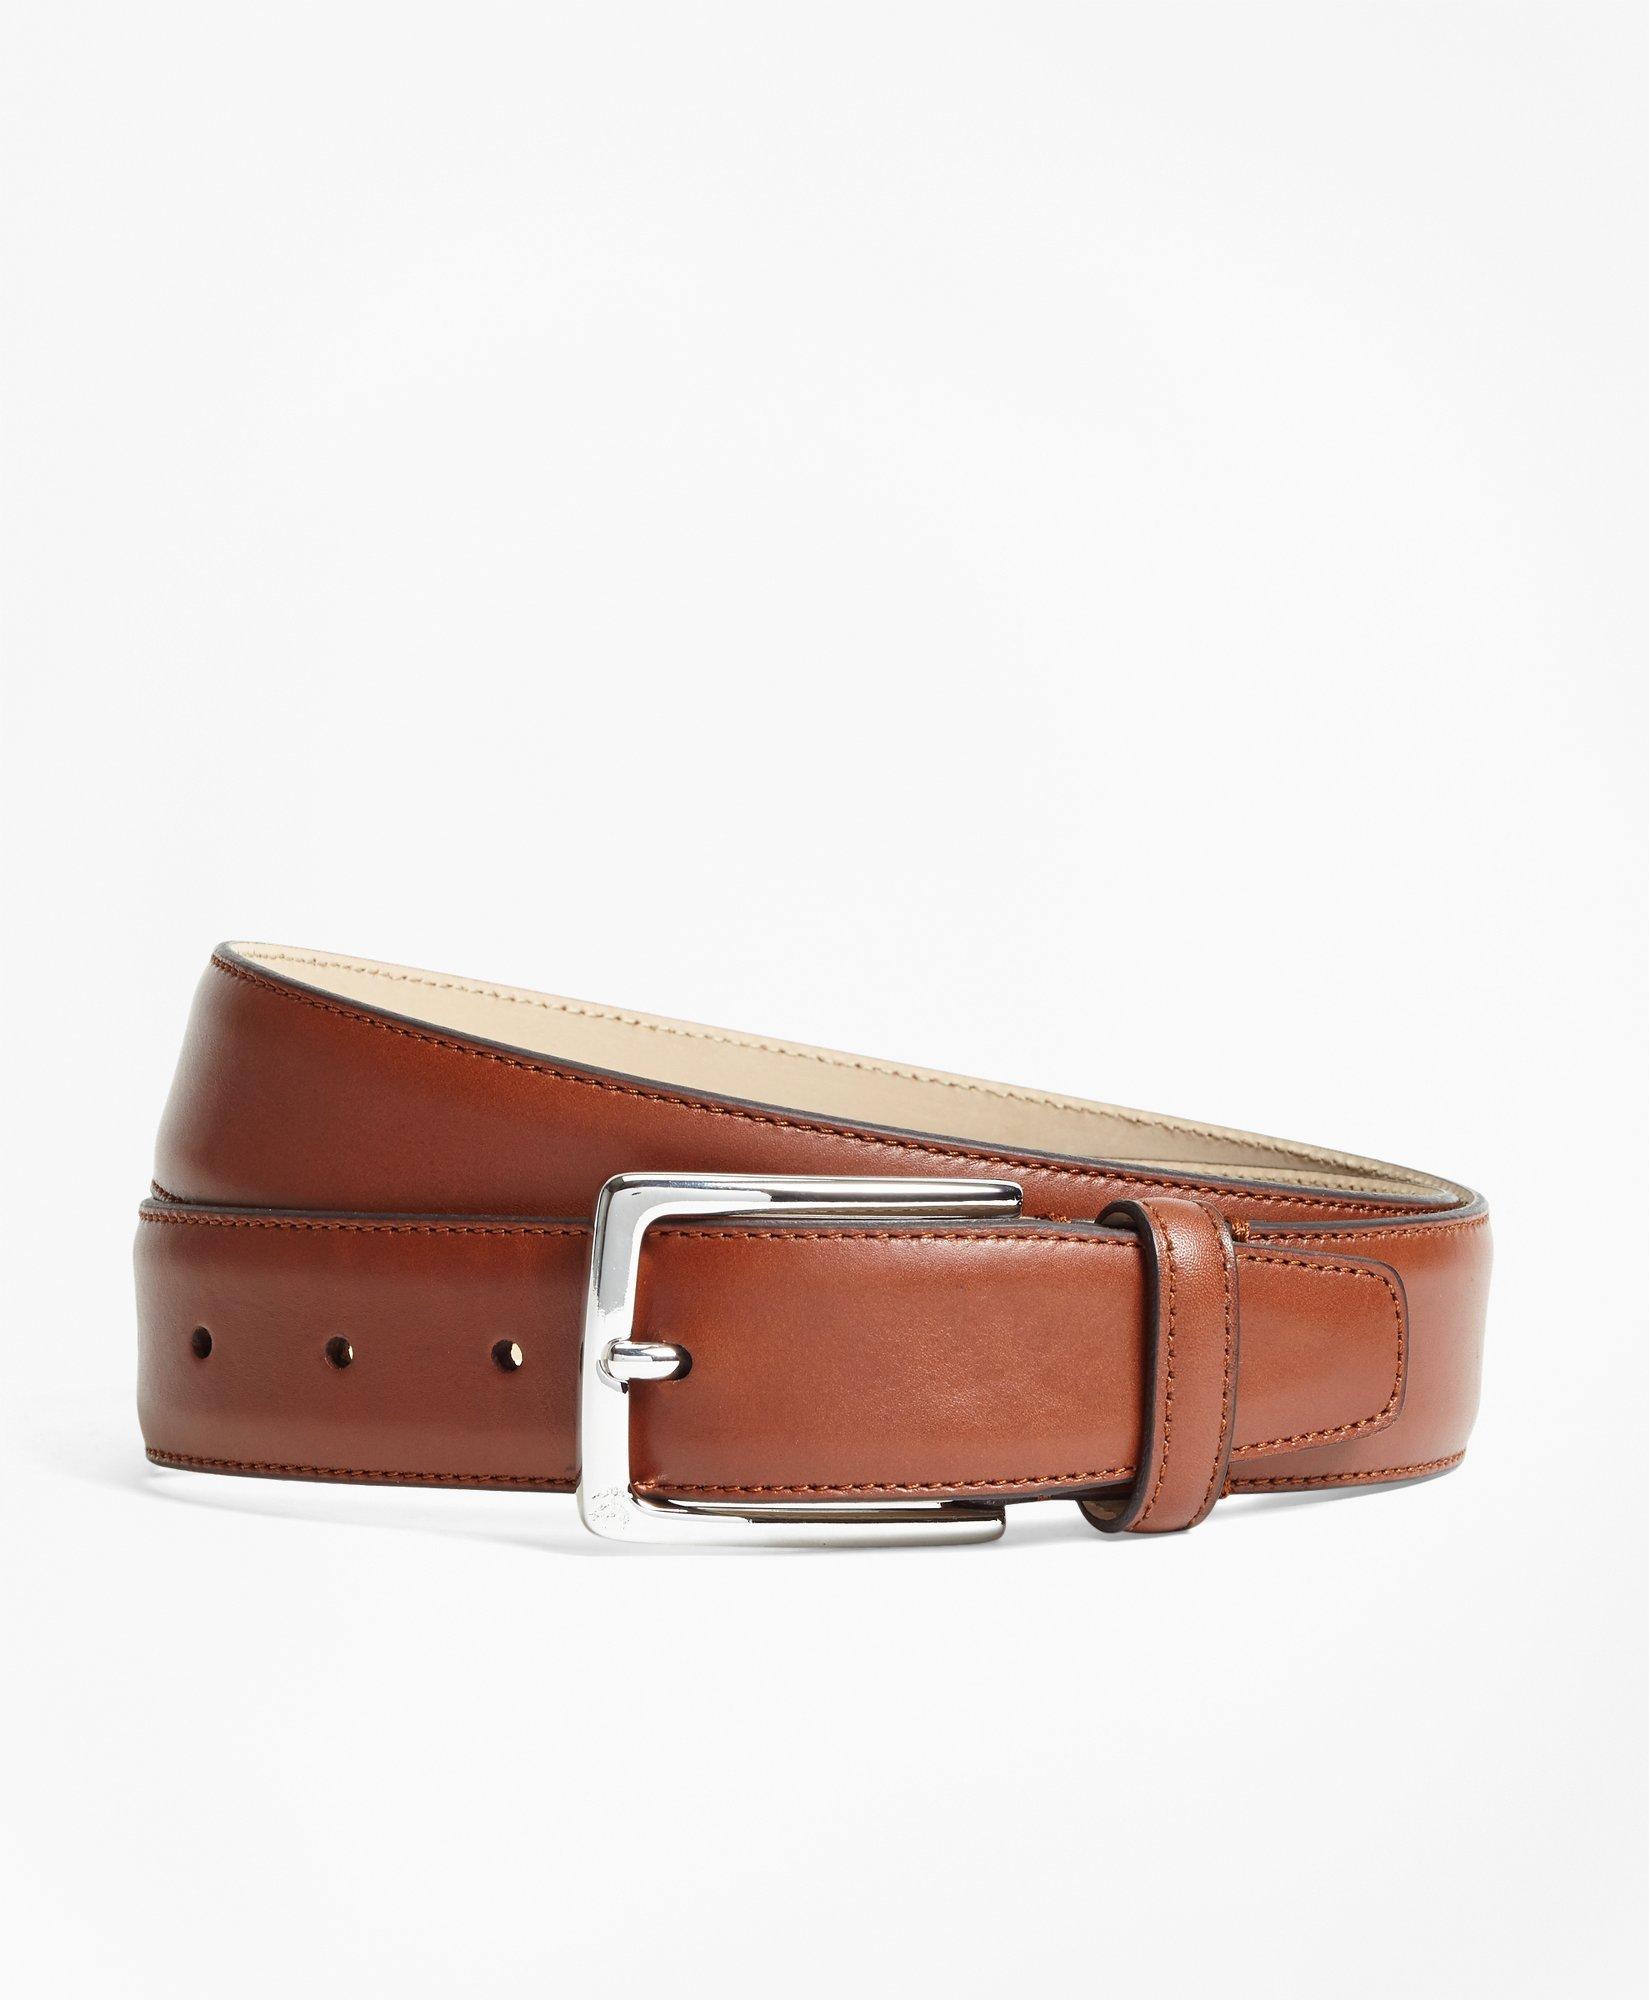 Brooks Brothers 1818 Leather Belt | Cognac | Size 32